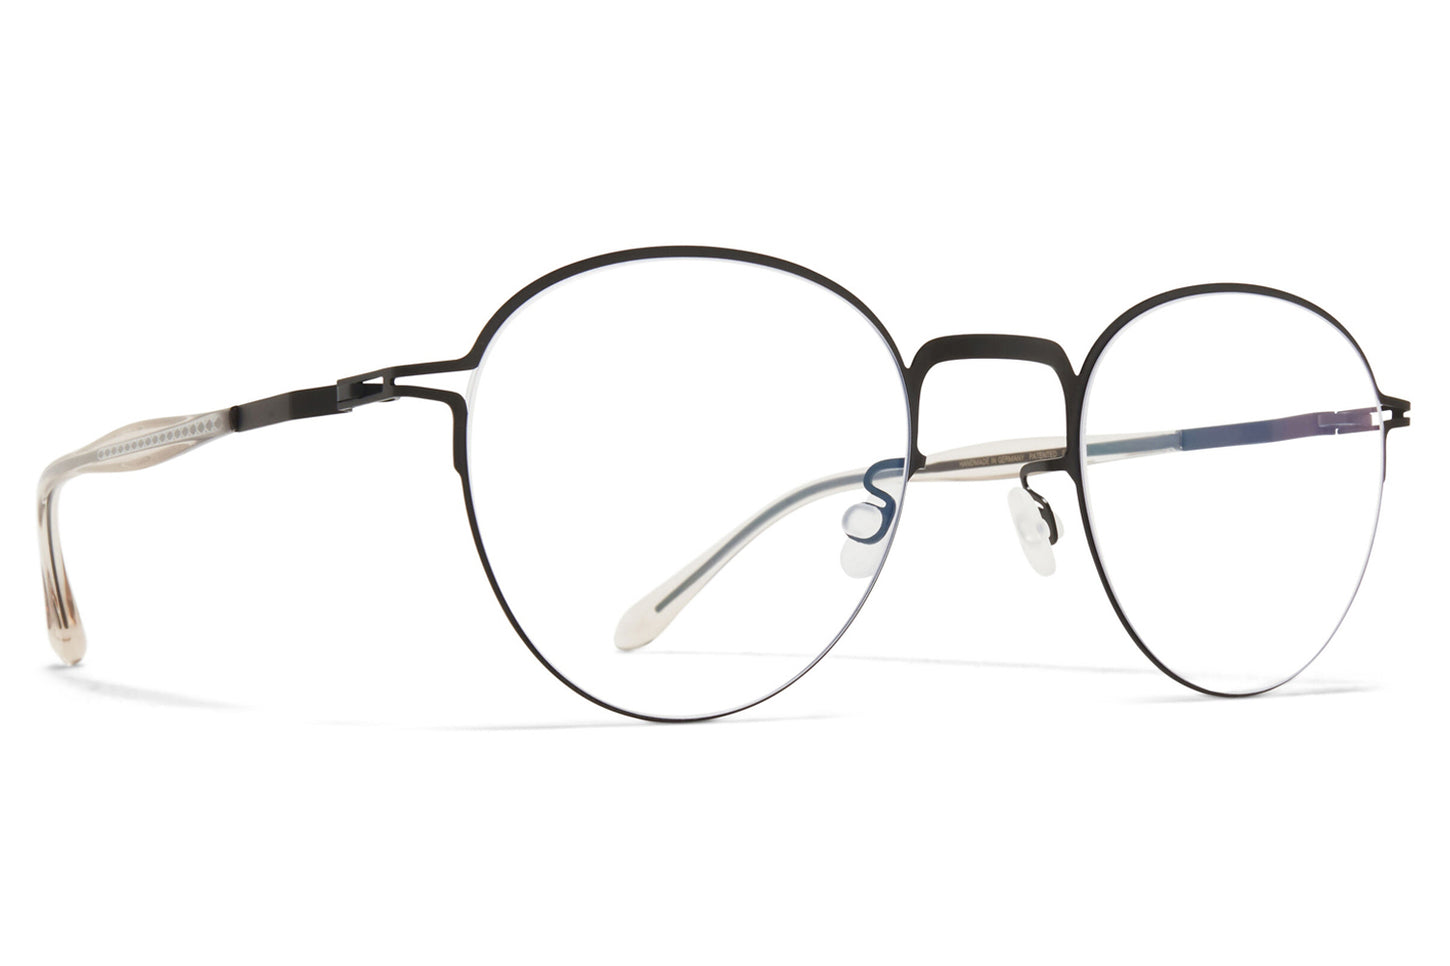 MYKITA® Eyeglasses Collection - Specs Collective